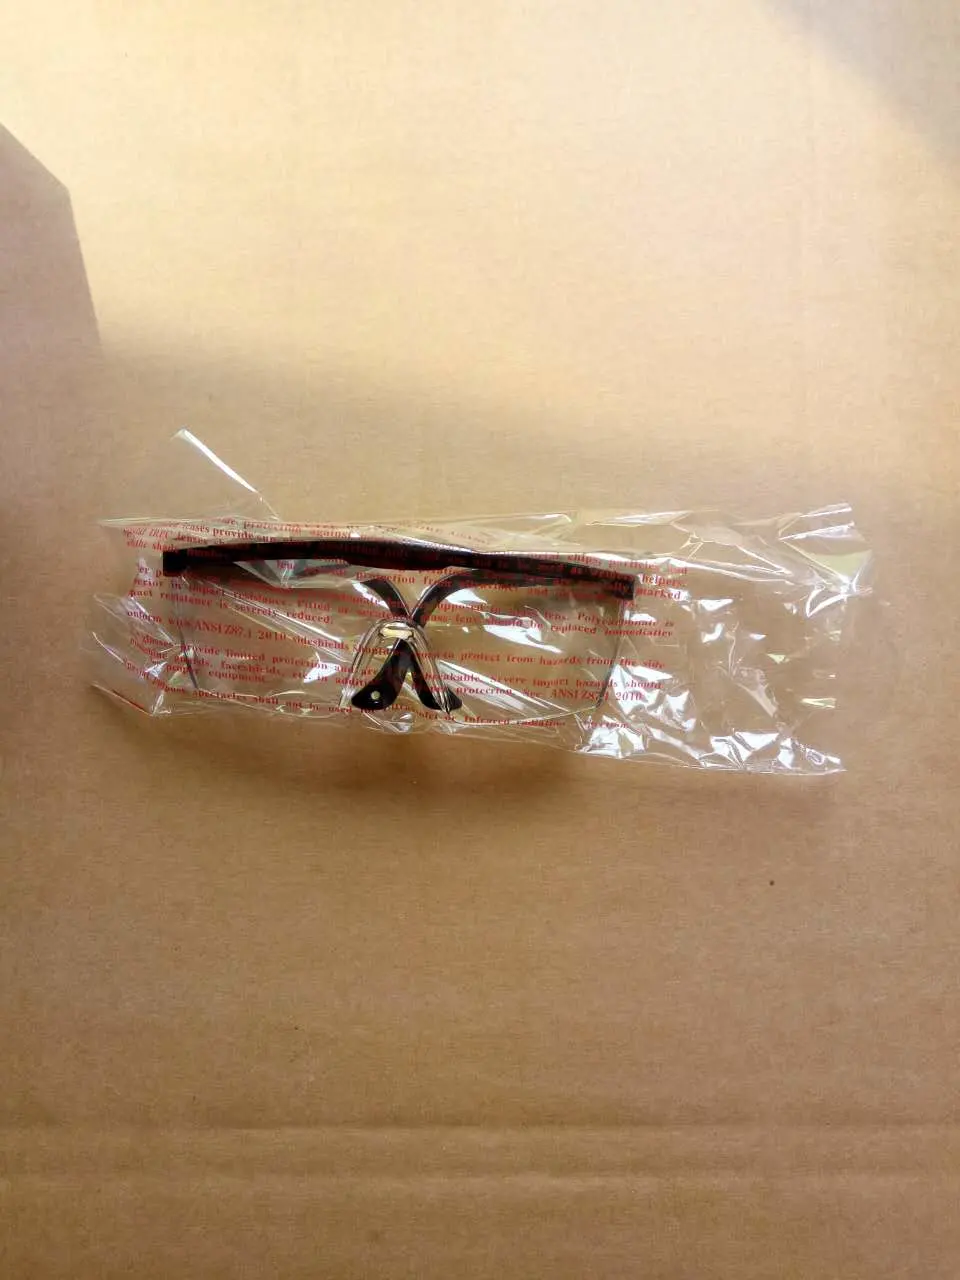 ANSI Z87.1 & CE En166 Safety Glasses Industrial Safety Eye Protection Safety Goggles